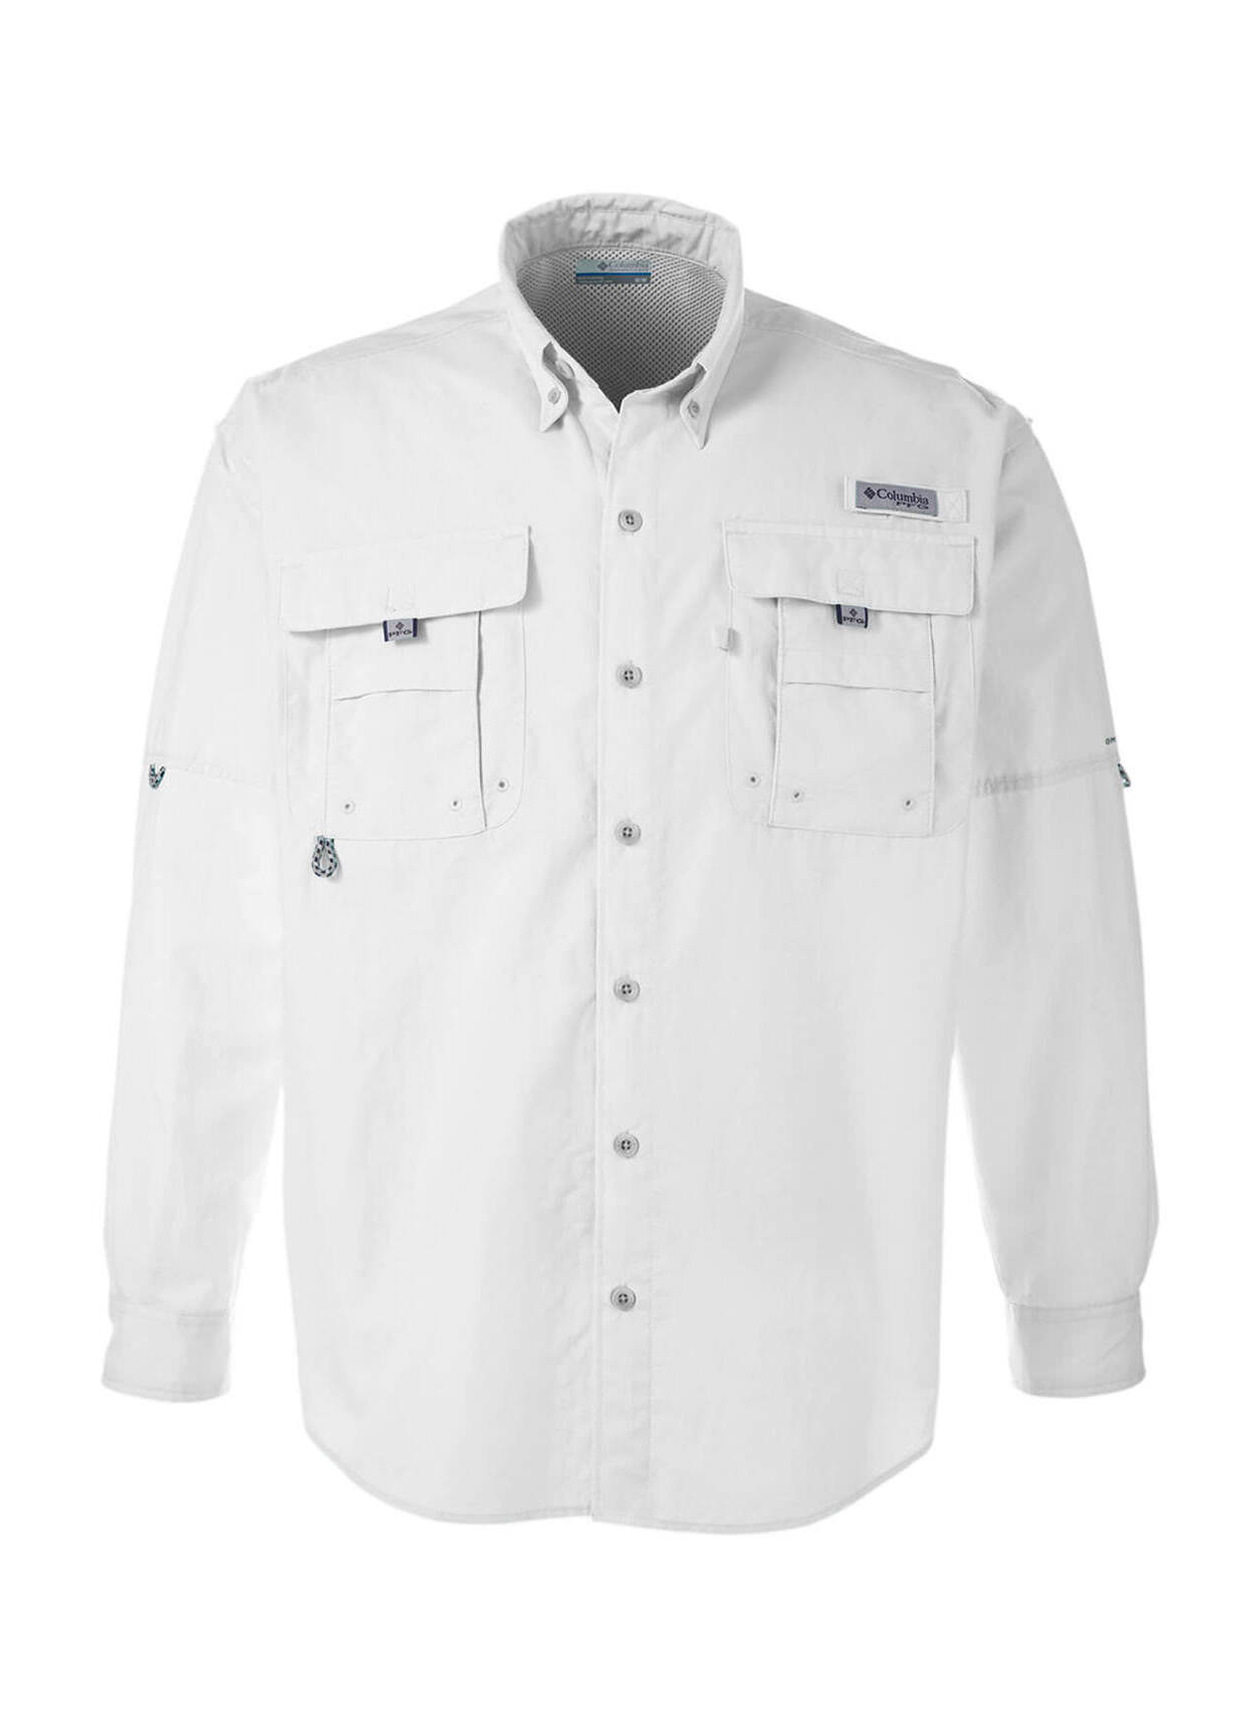 Columbia 7048 Men's Bahama II Long Sleeve Shirt